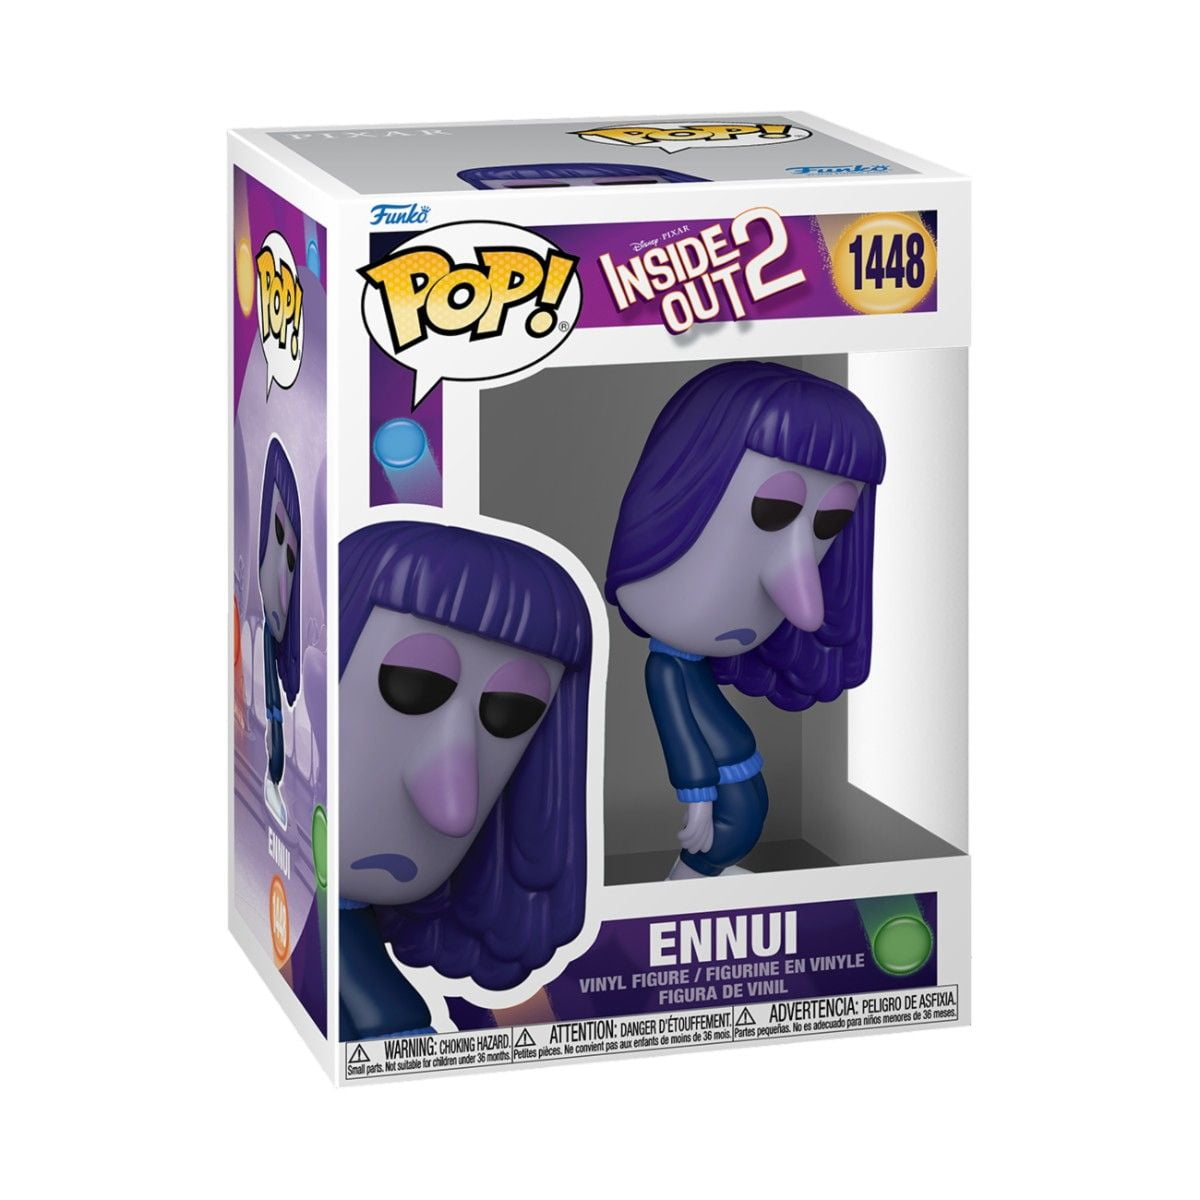 Ennui - Inside Out 2 - Funko POP! Disney (1448)